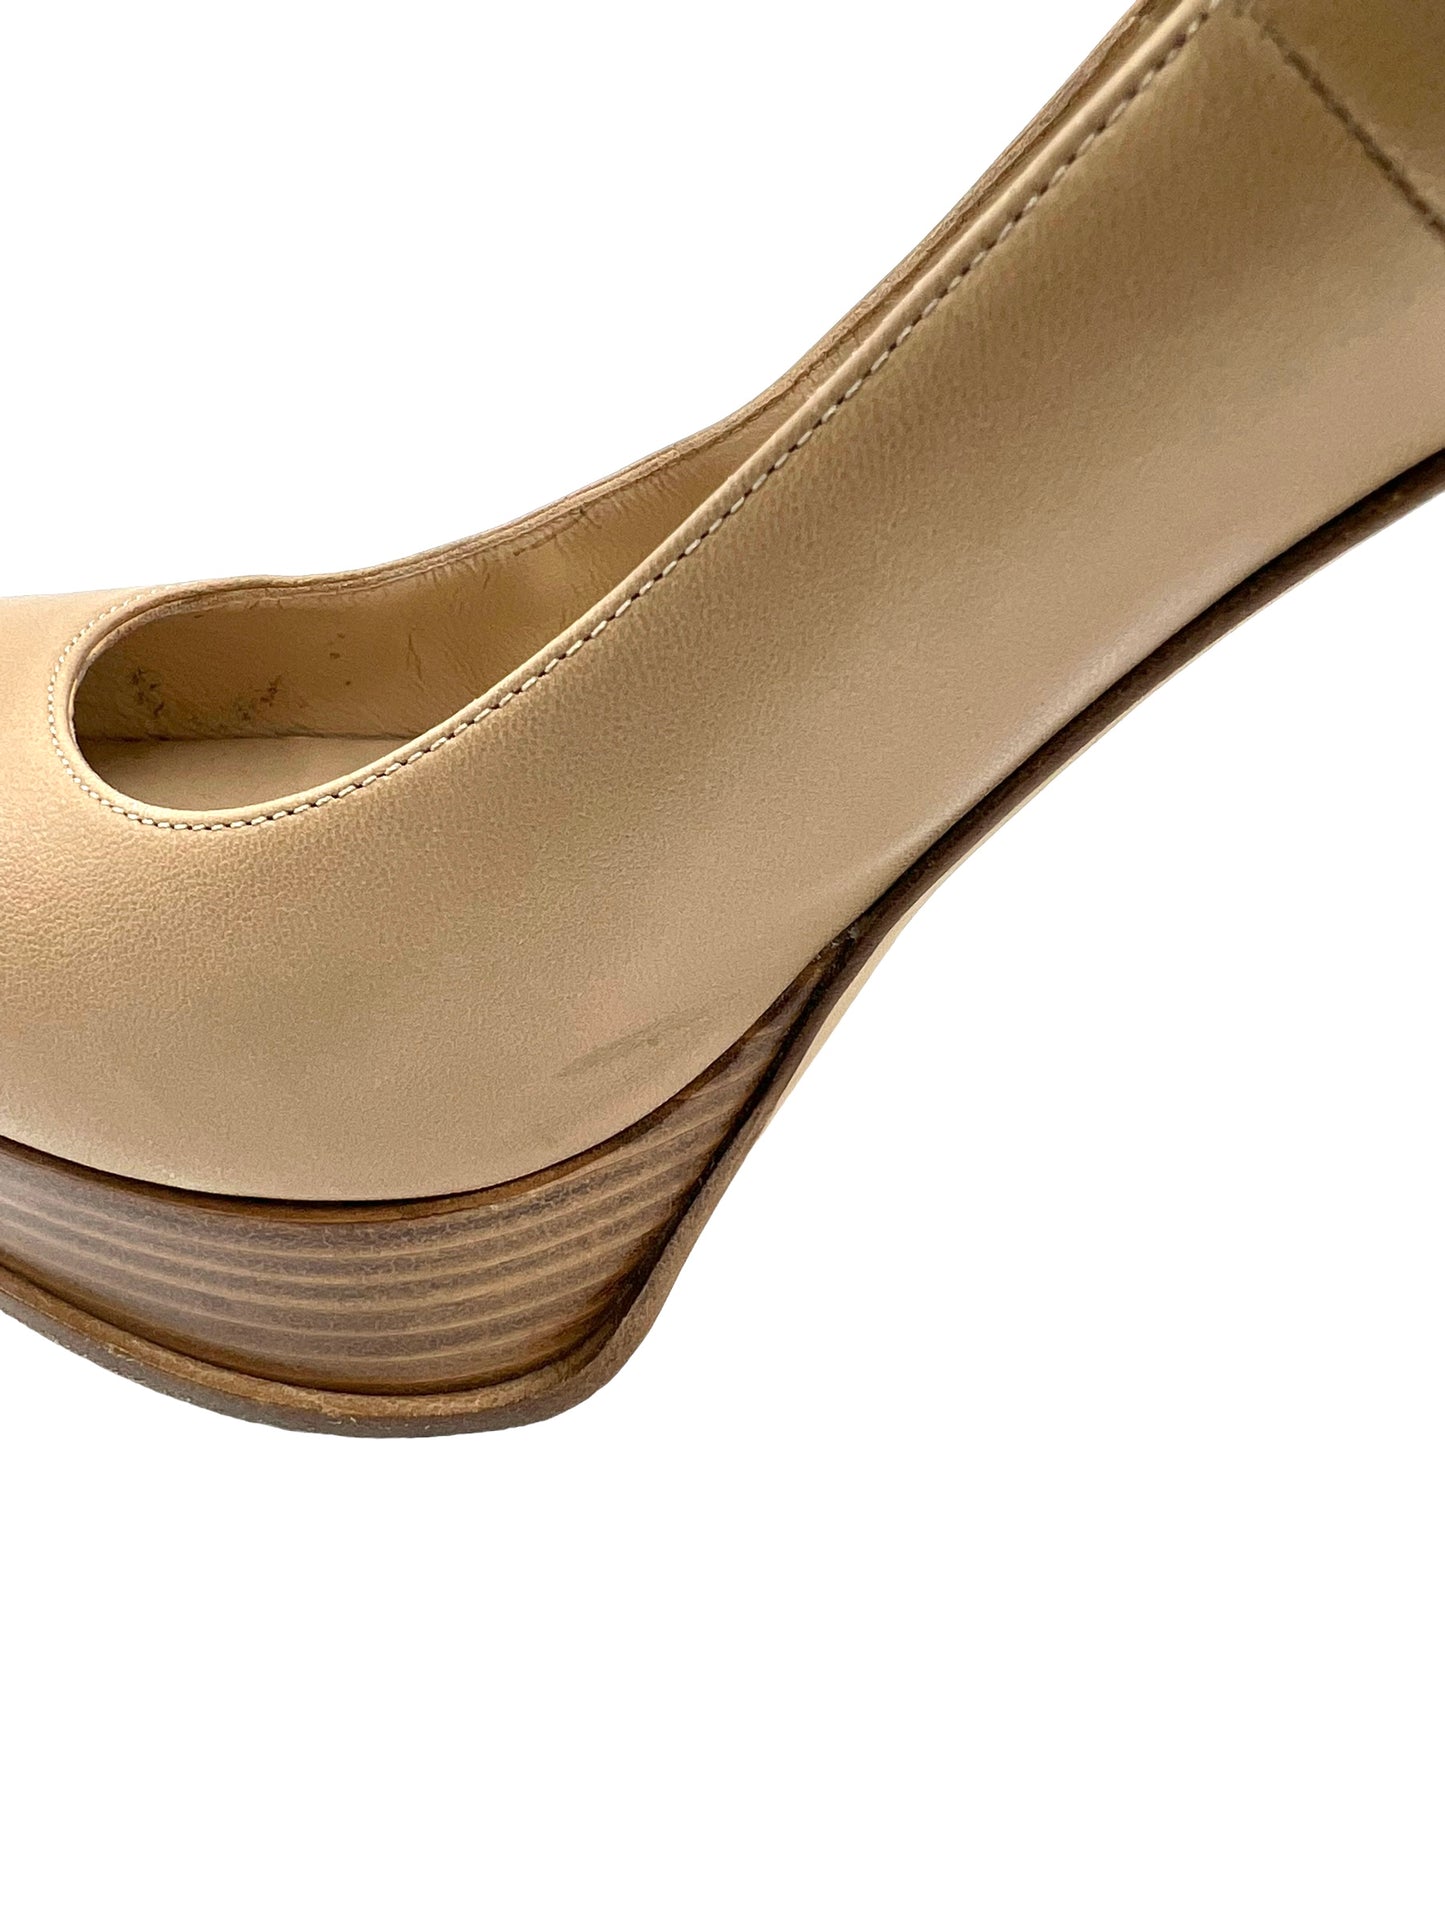 Fendi Size 39.5 Nude Leather 'Fendista' Platform Heels